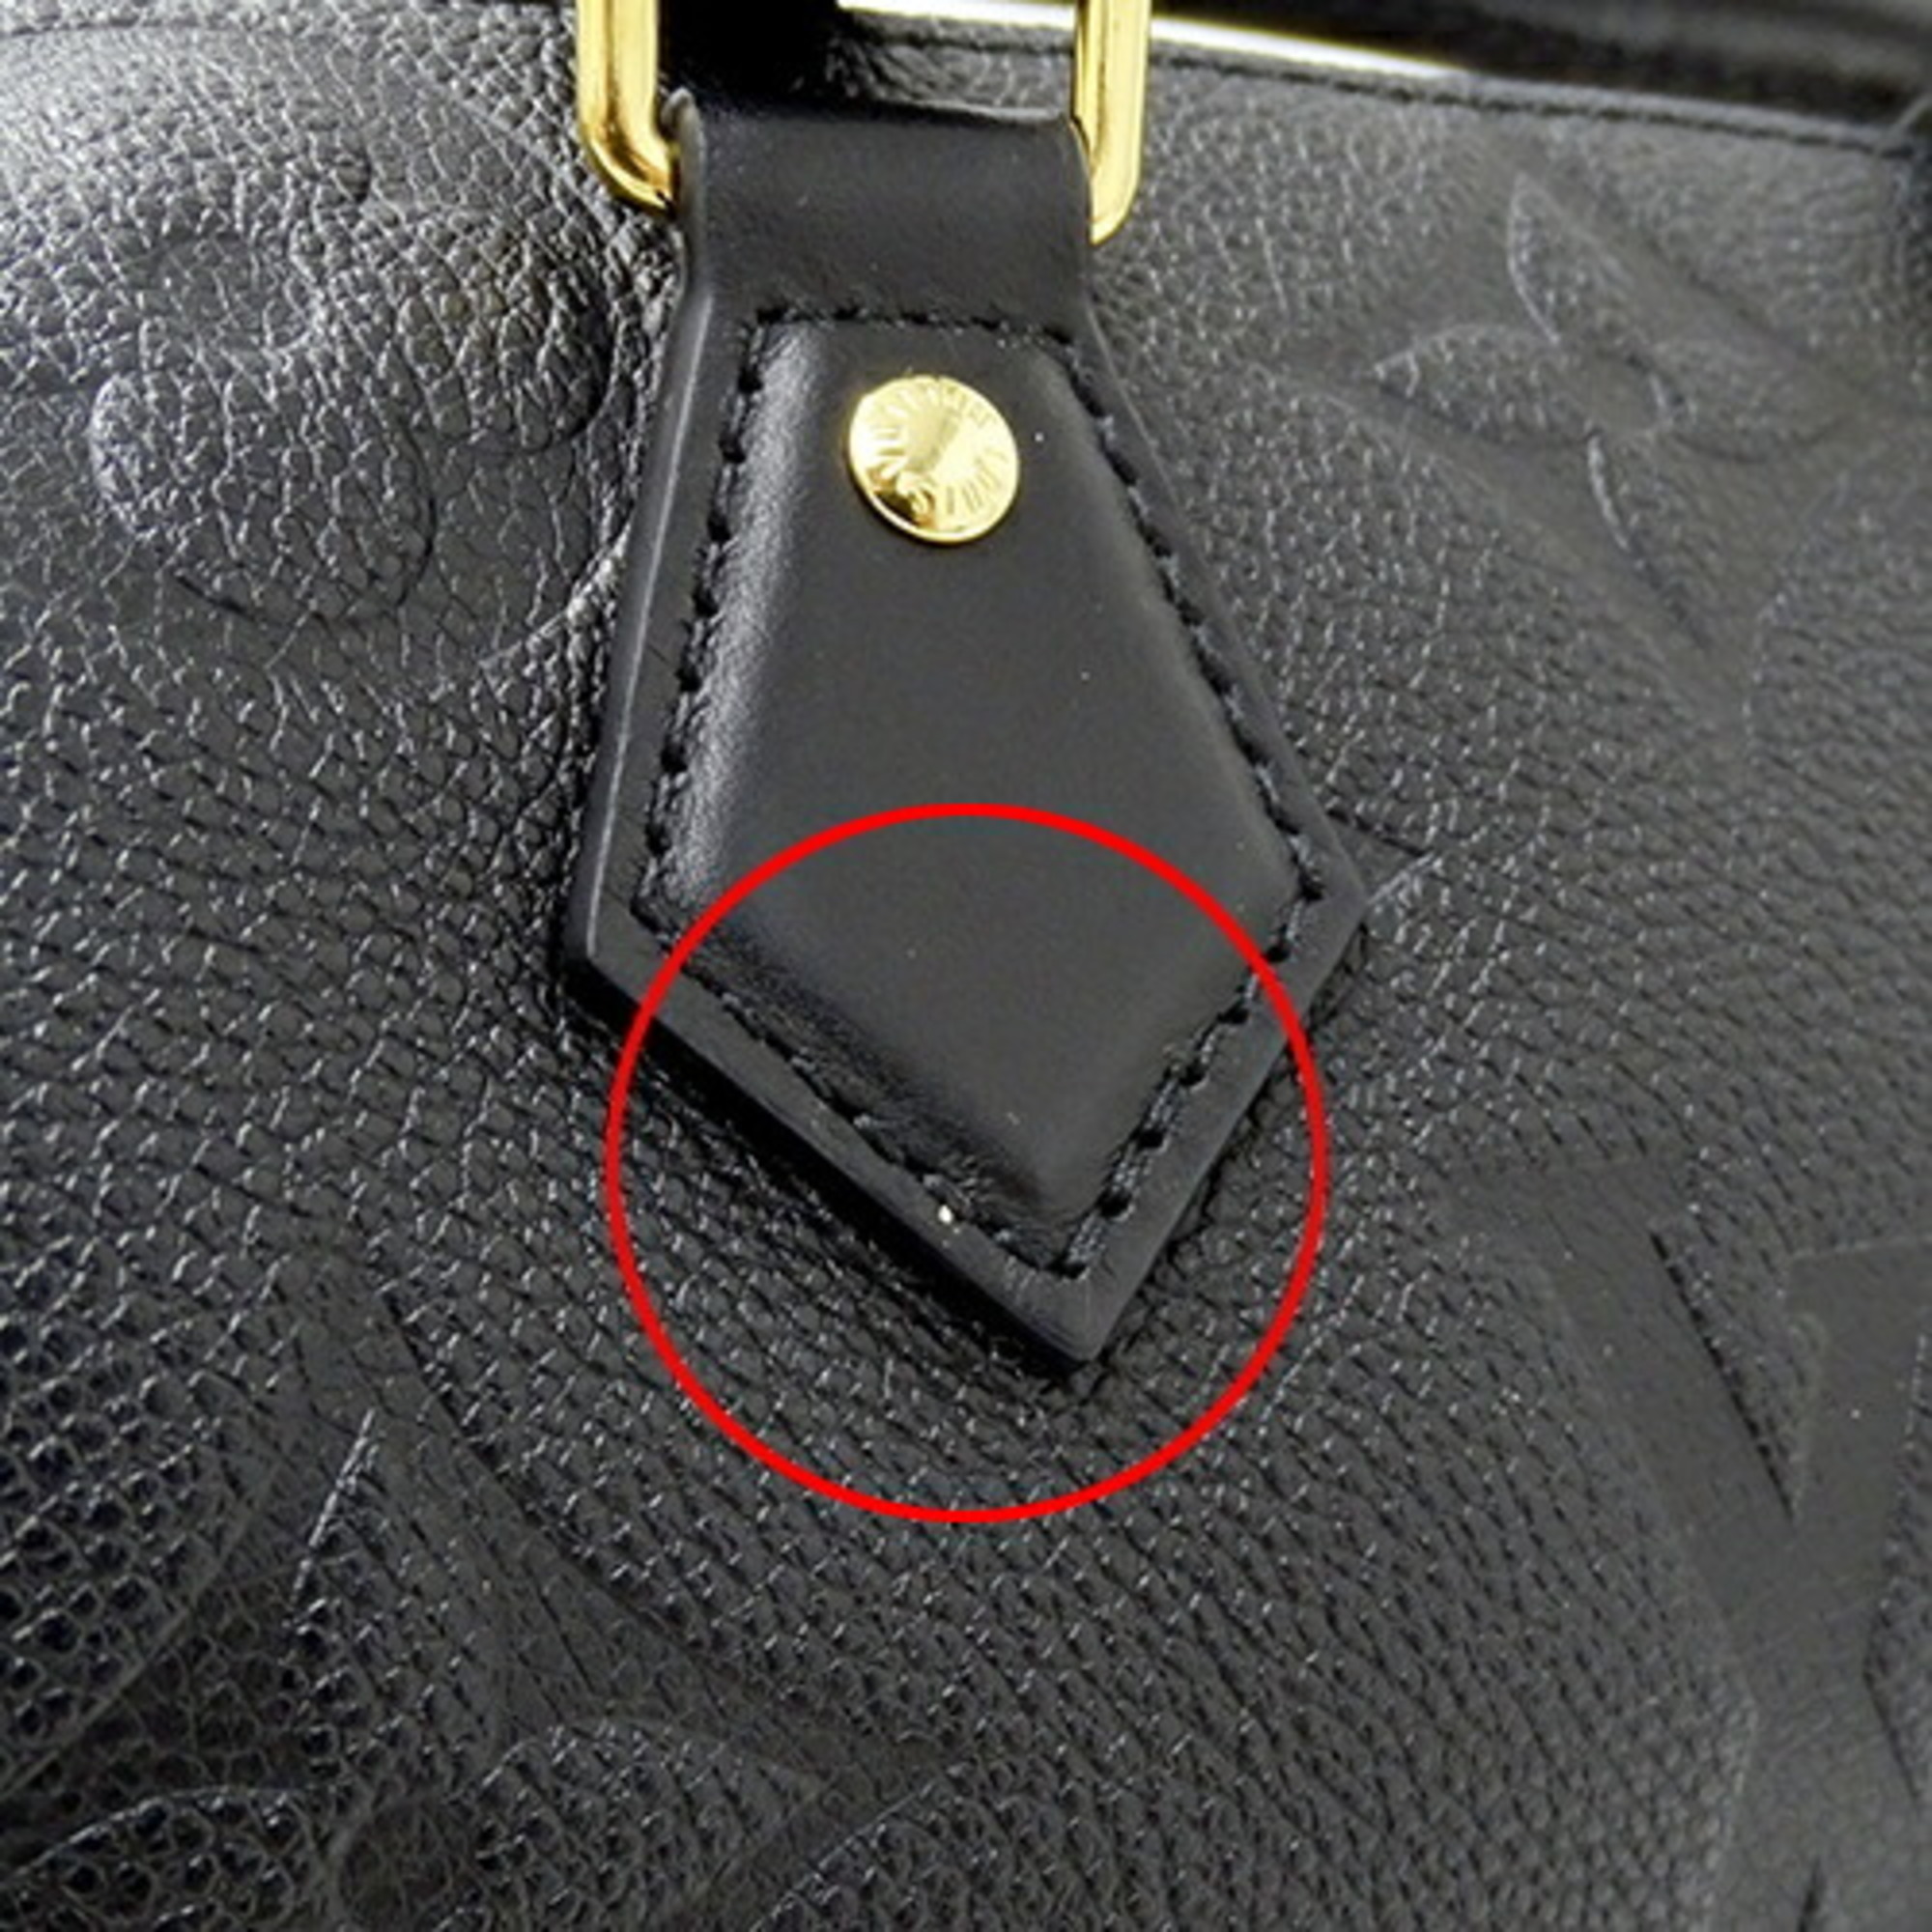 Louis Vuitton LOUIS VUITTON Bag Monogram Empreinte Women's Handbag Shoulder 2way Speedy Bandouliere 20 Noir M58953 Black Compact